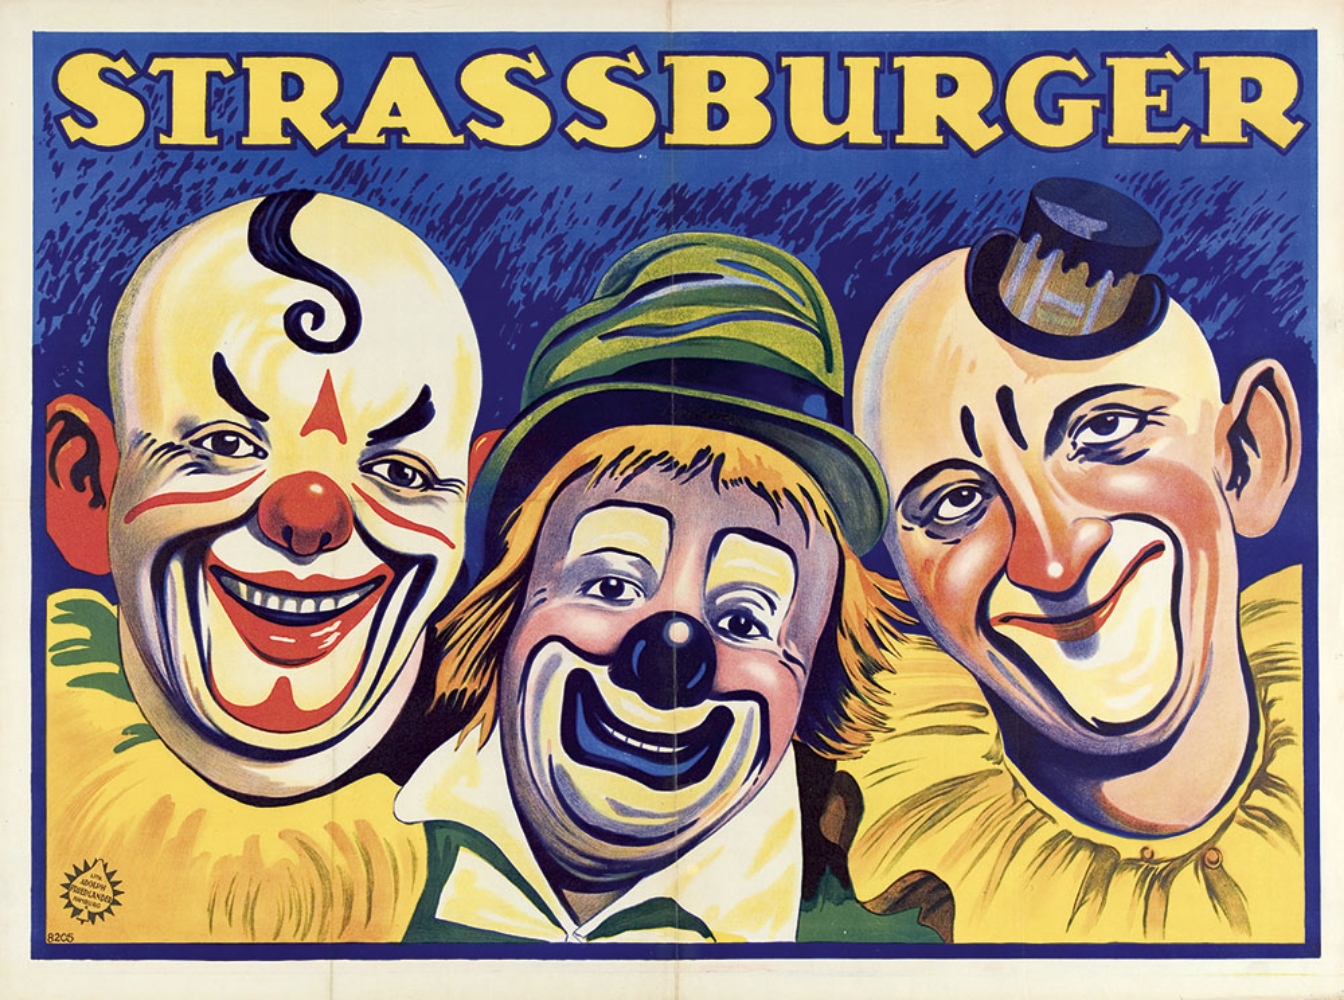 [Strassburger] "Portrait of three clowns"